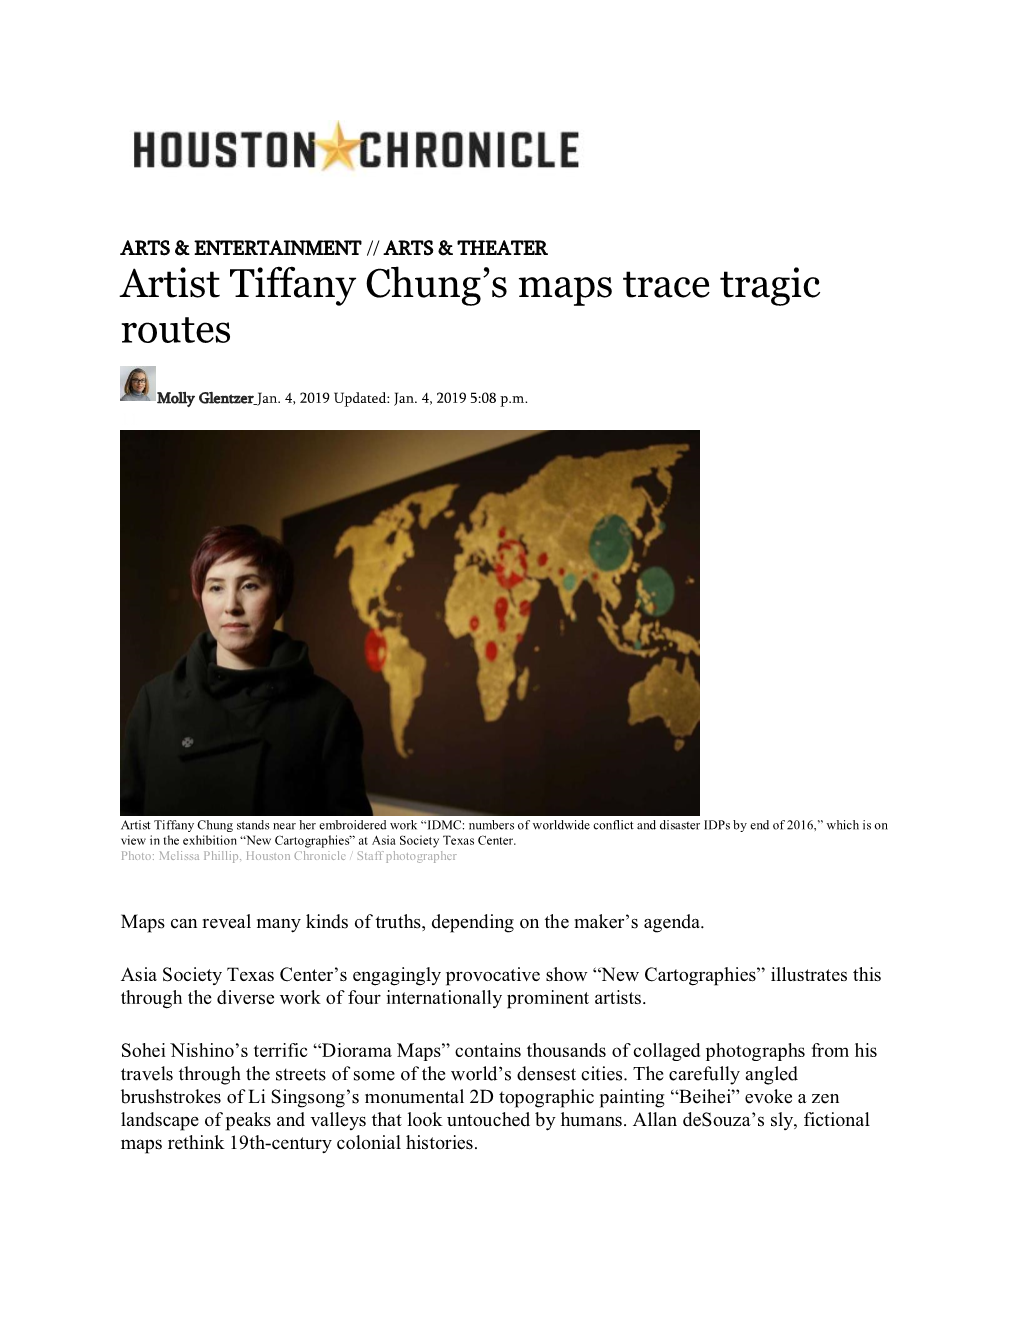 Artist Tiffany Chung's Maps Trace Tragic Routes